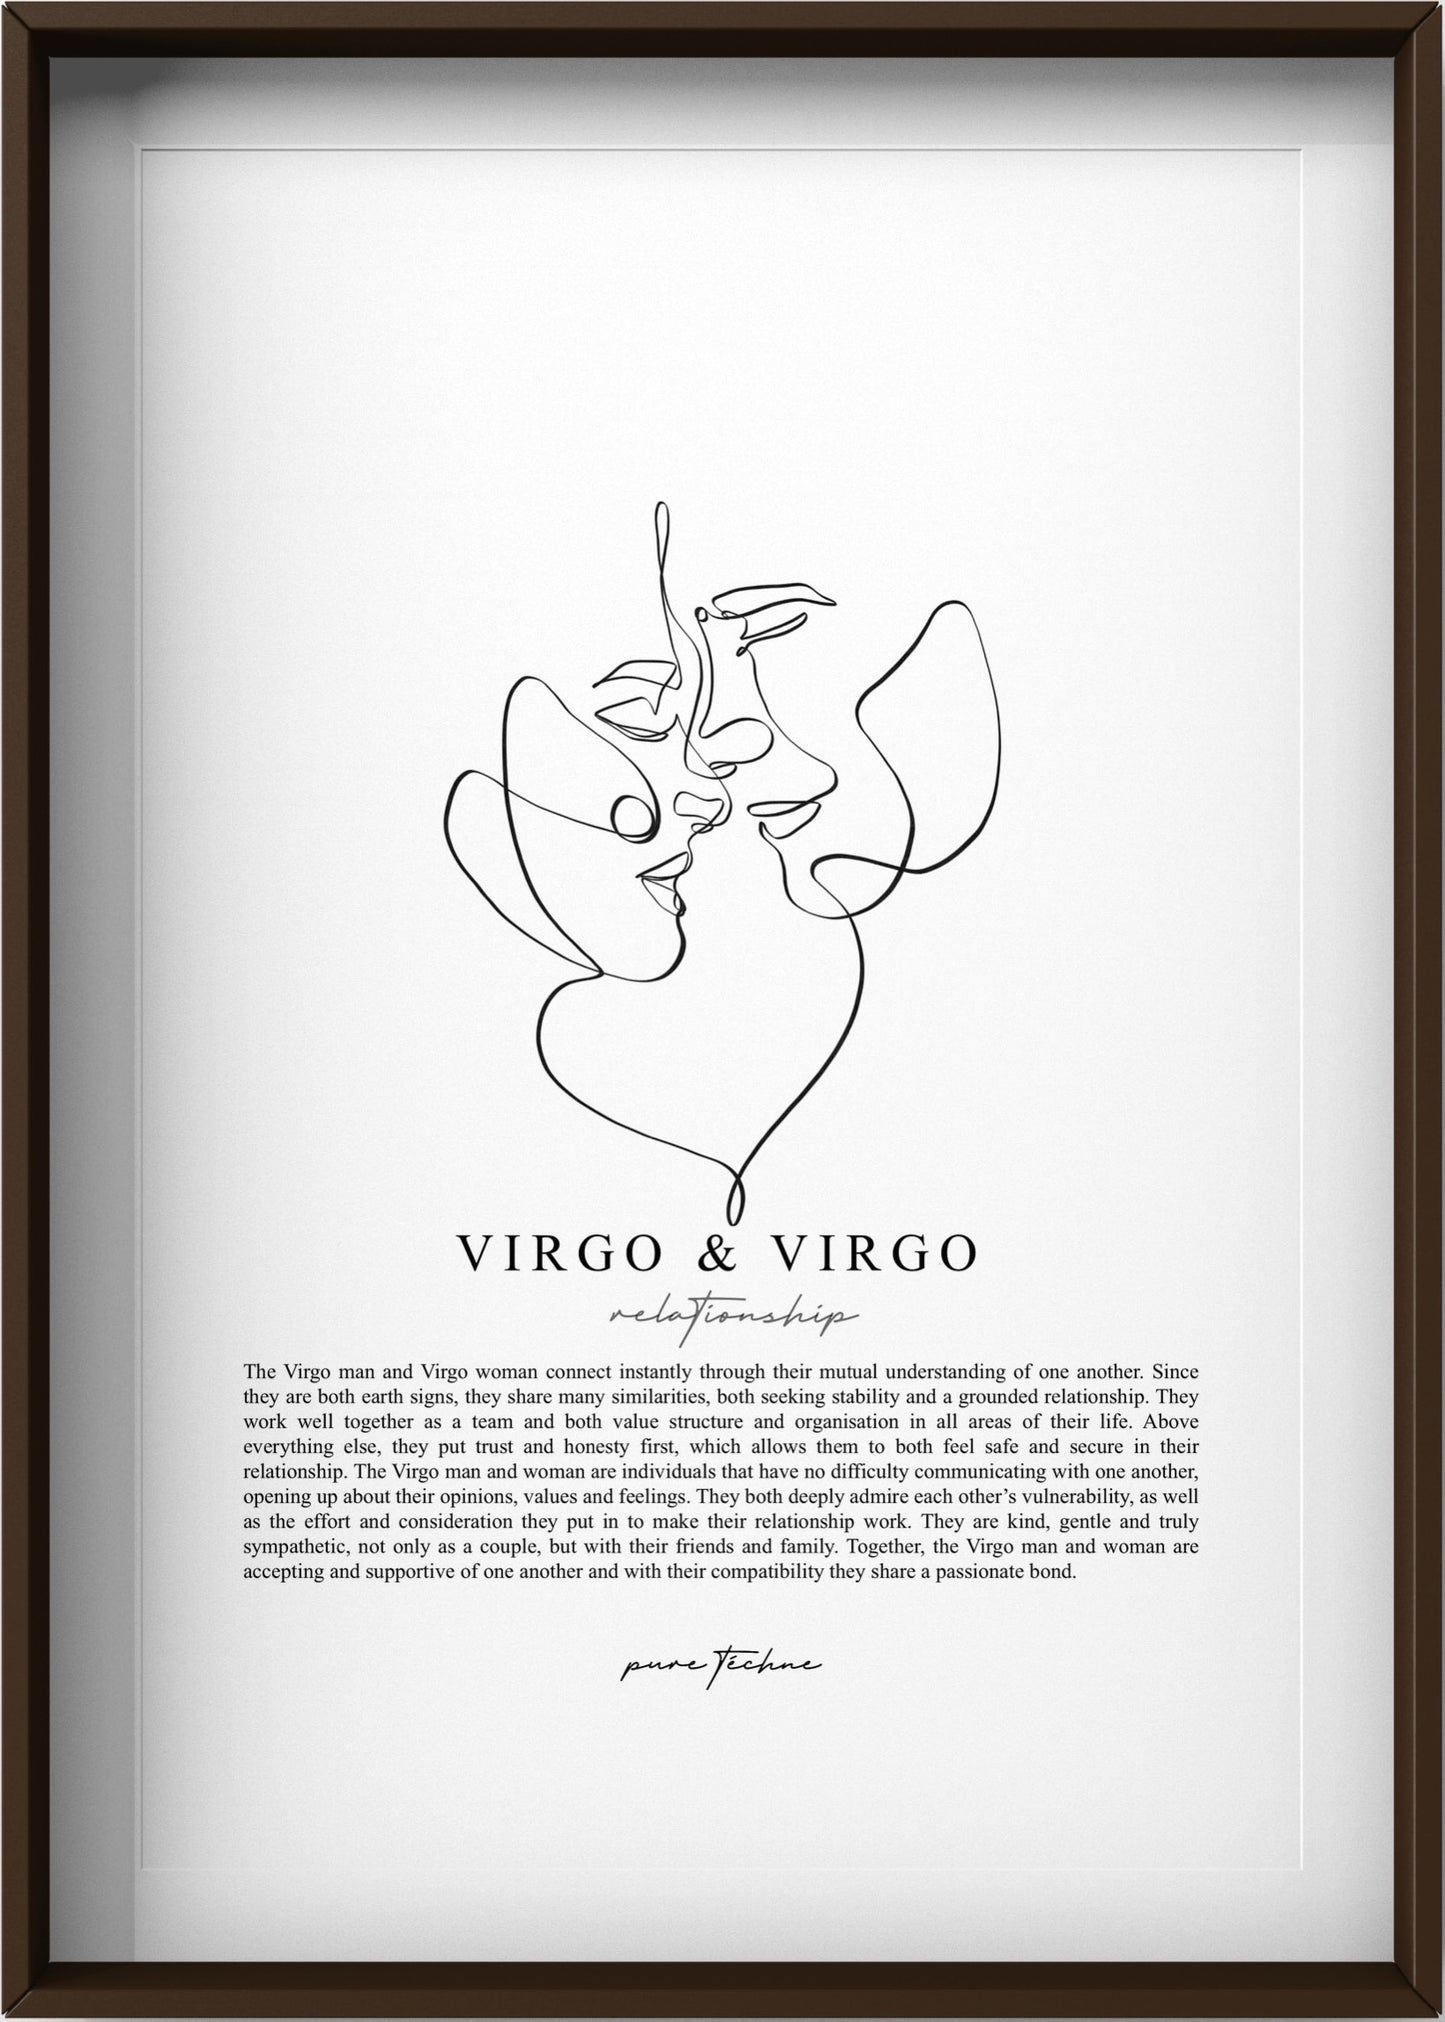 Virgo Man & Virgo Woman